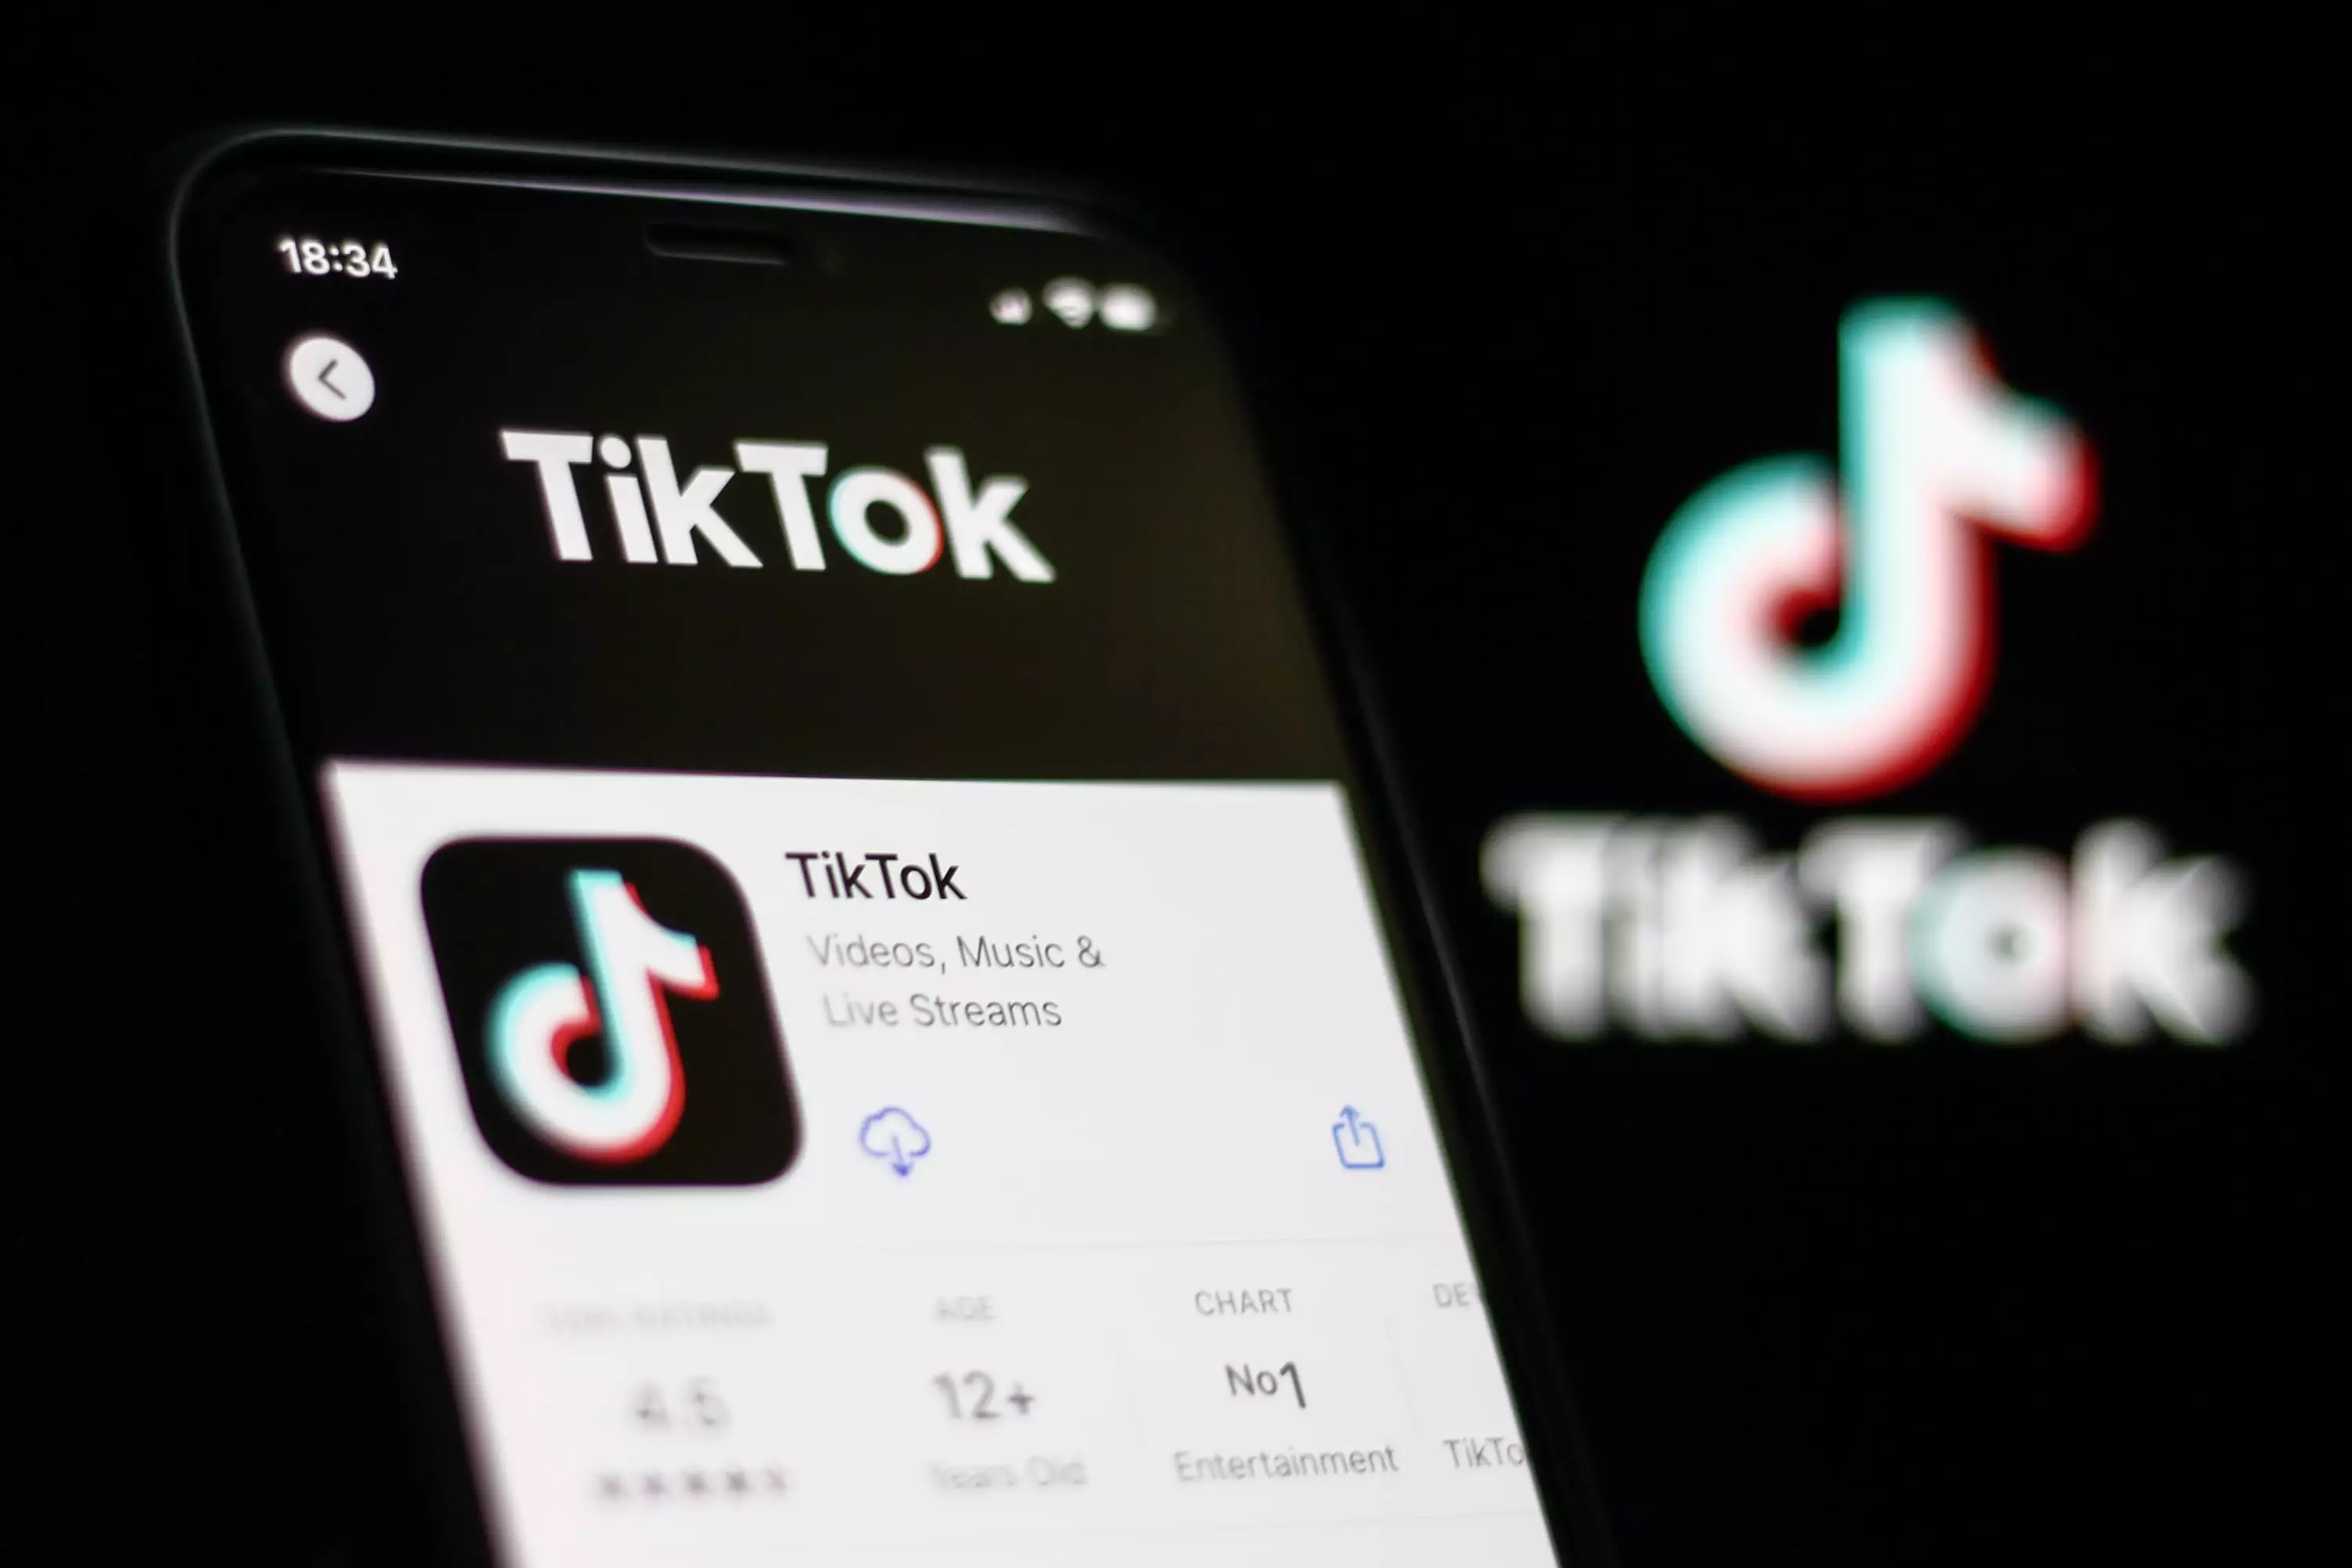 Download Tiktok Video Wallpaper